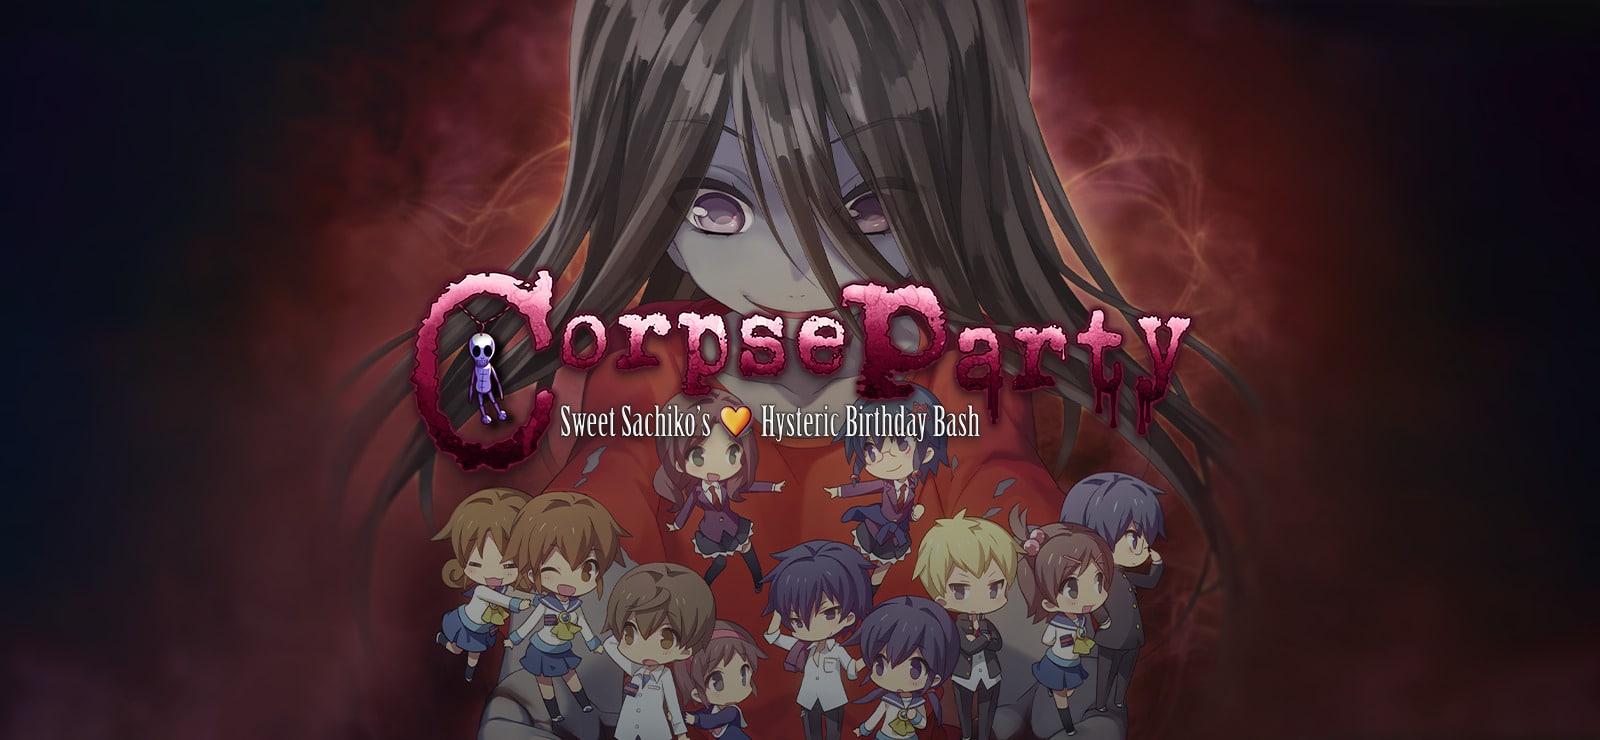 Corpse Party Sweet Sachiko’s Hysteric Birthday Bash